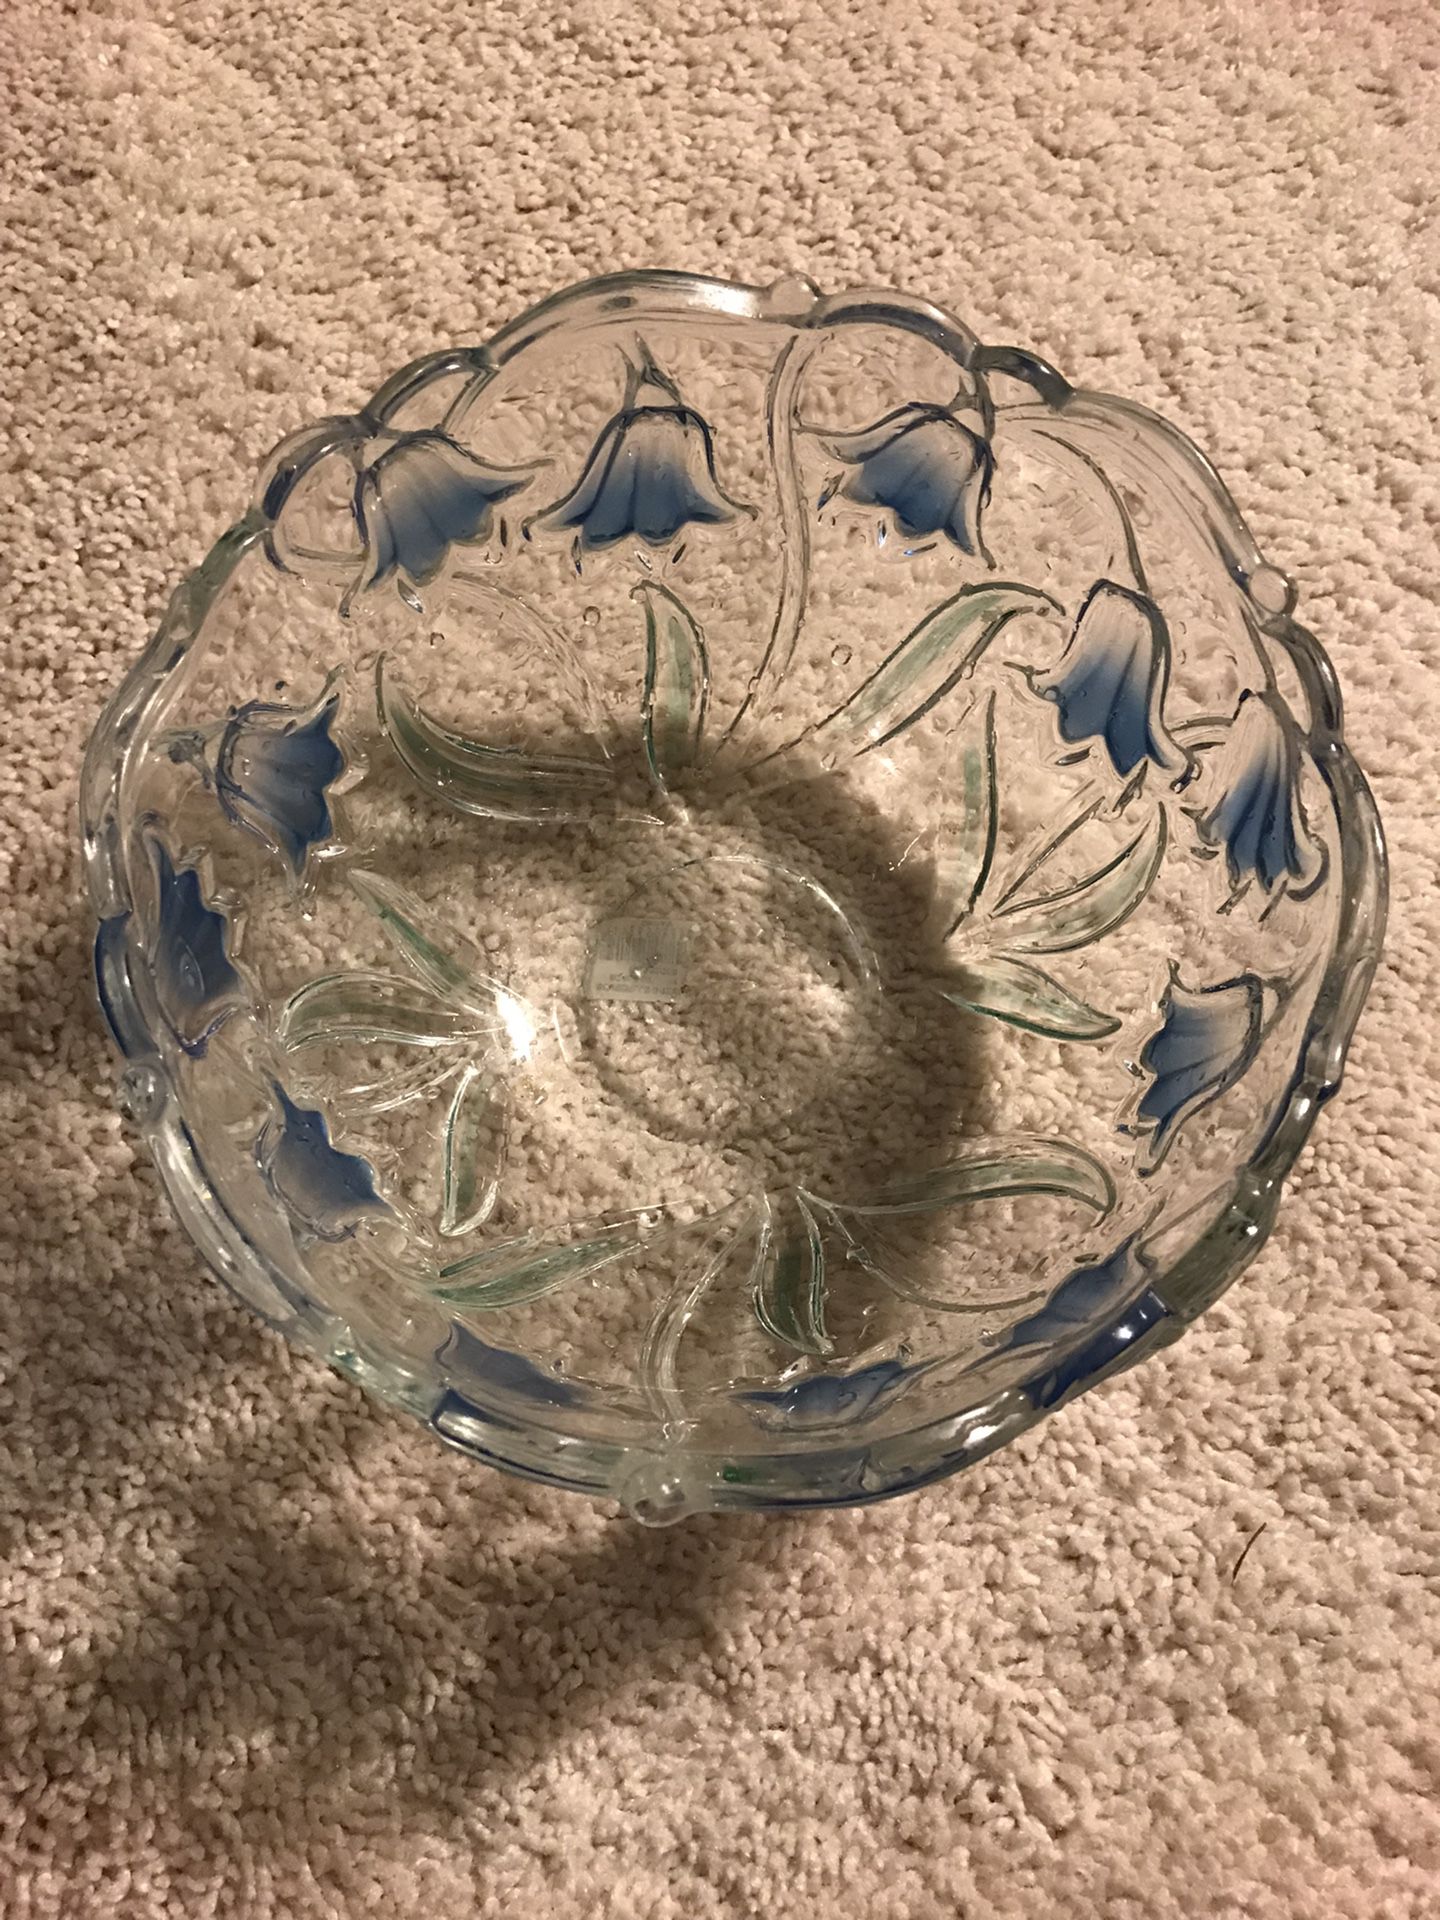 Swarovski fruit glass bowl